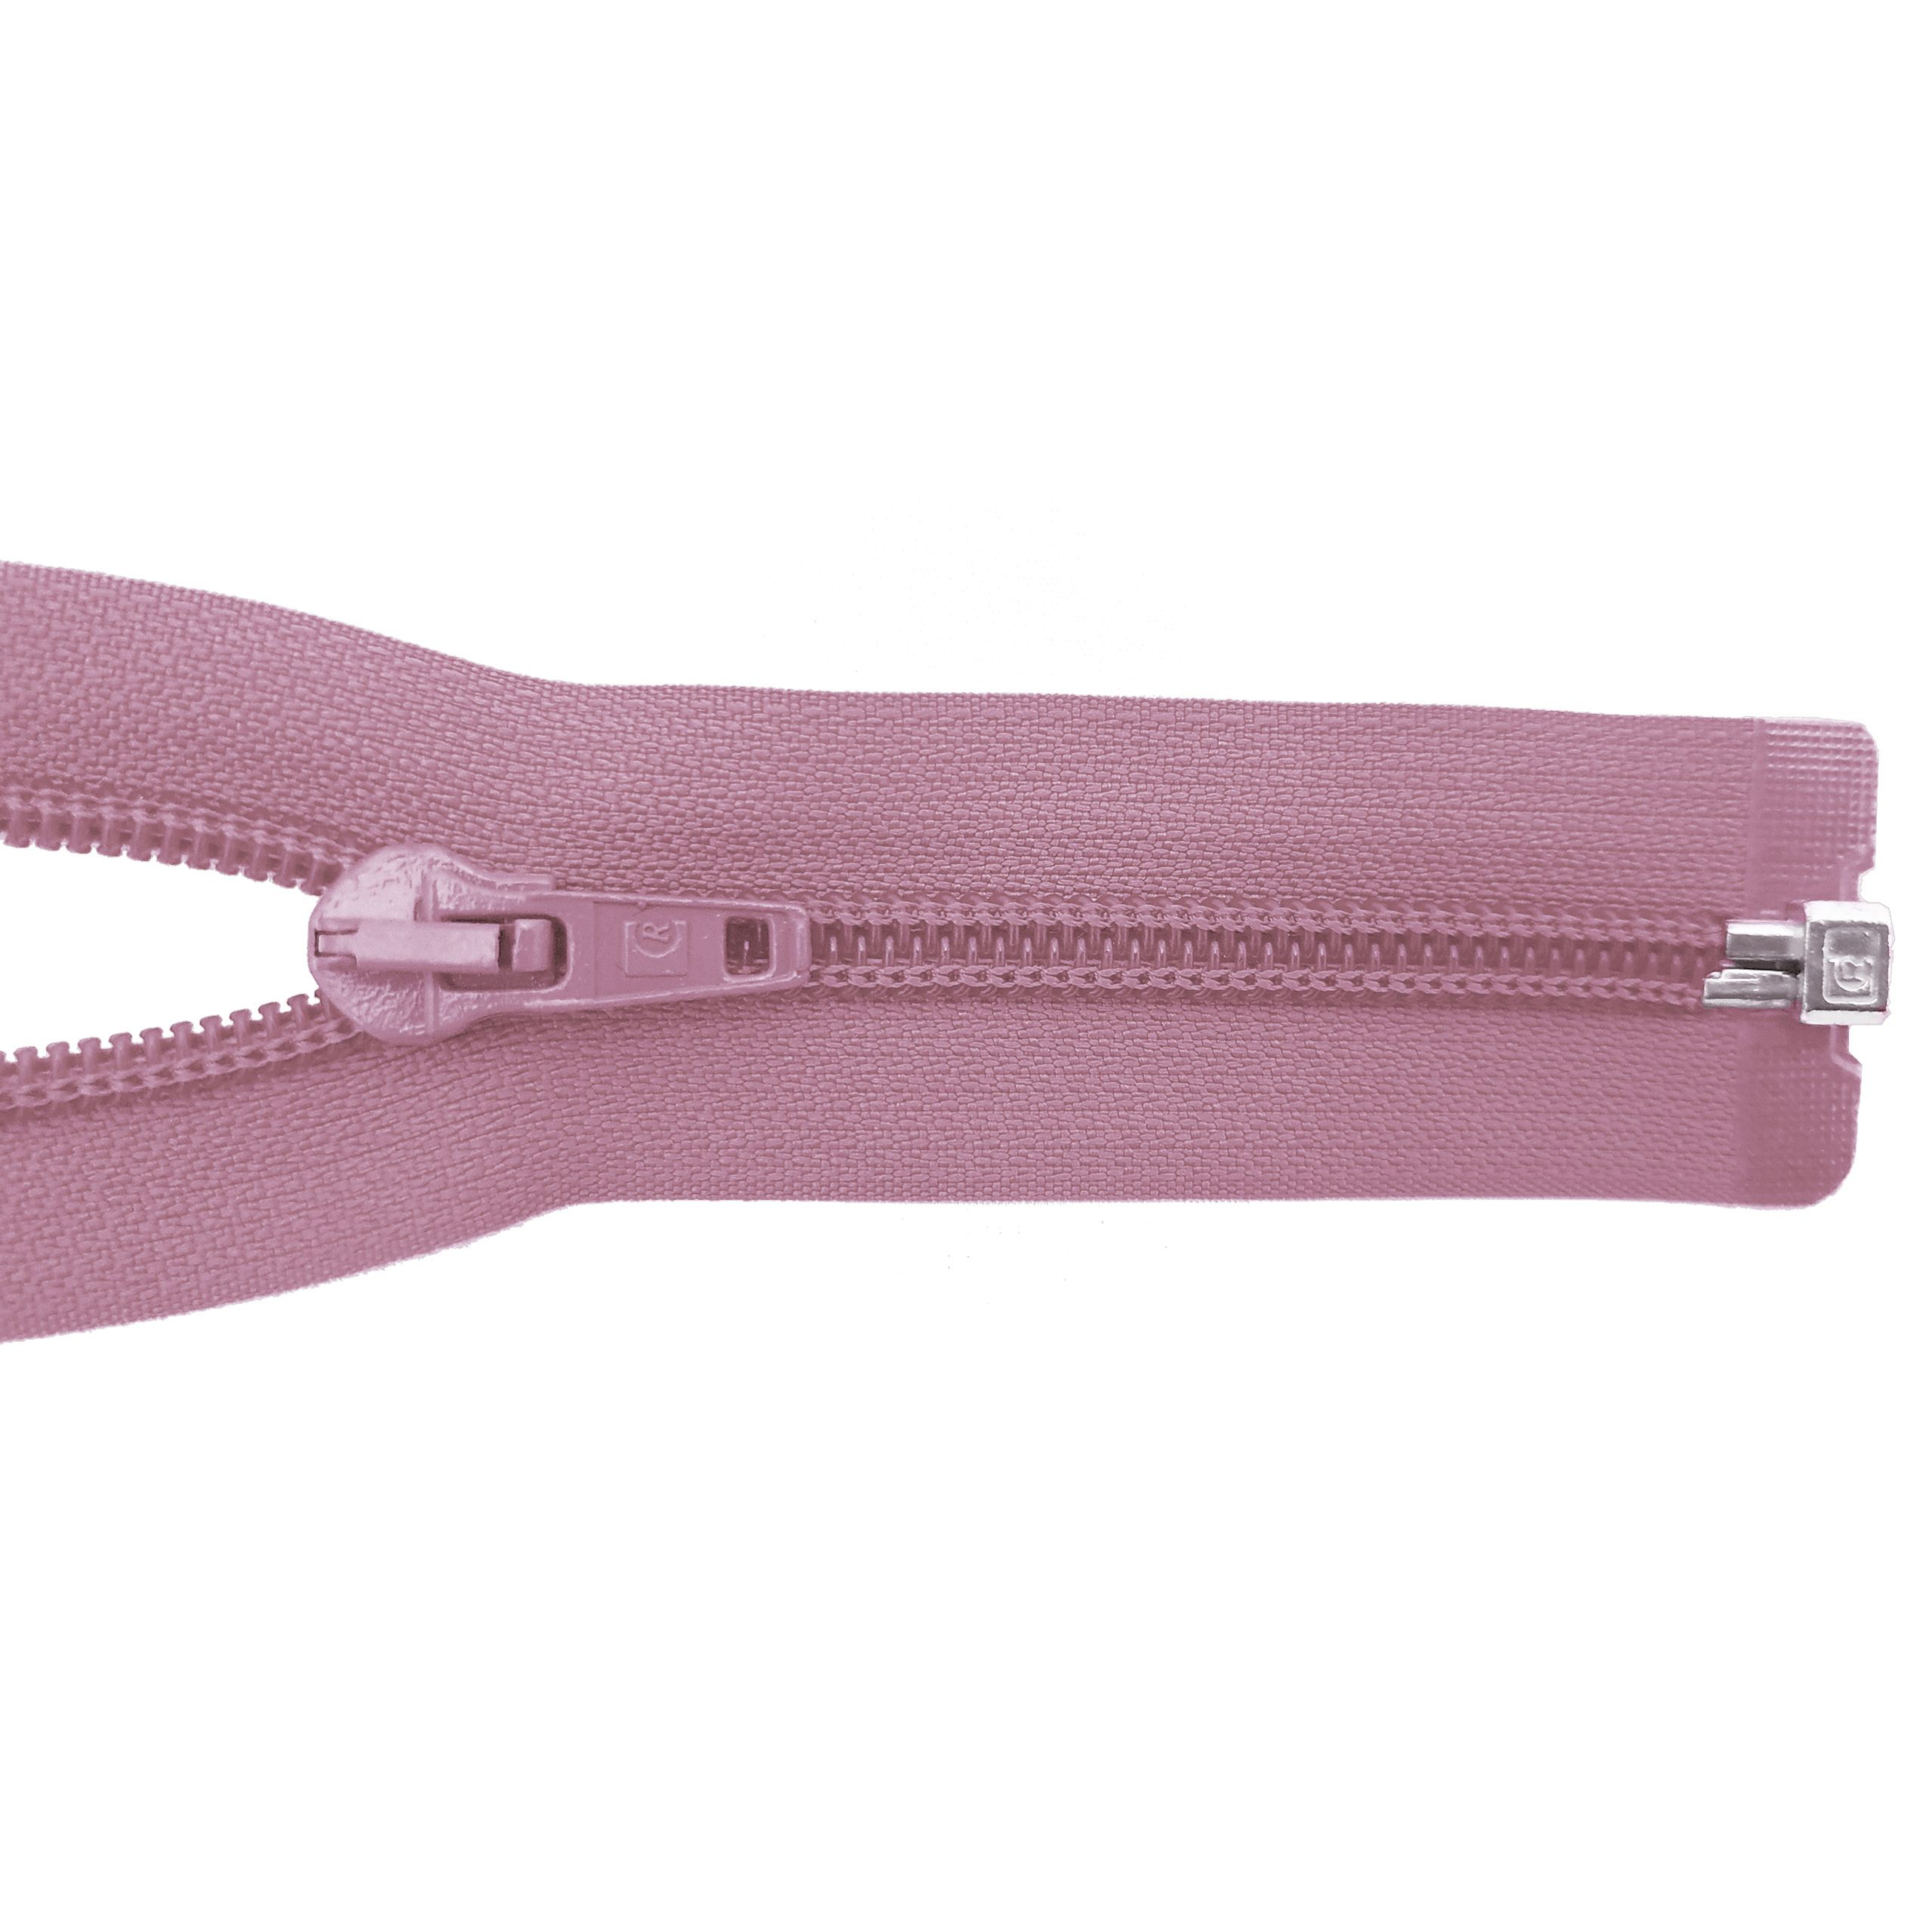 zipper 100cm,divisible, PES spiral, wide, antique pink